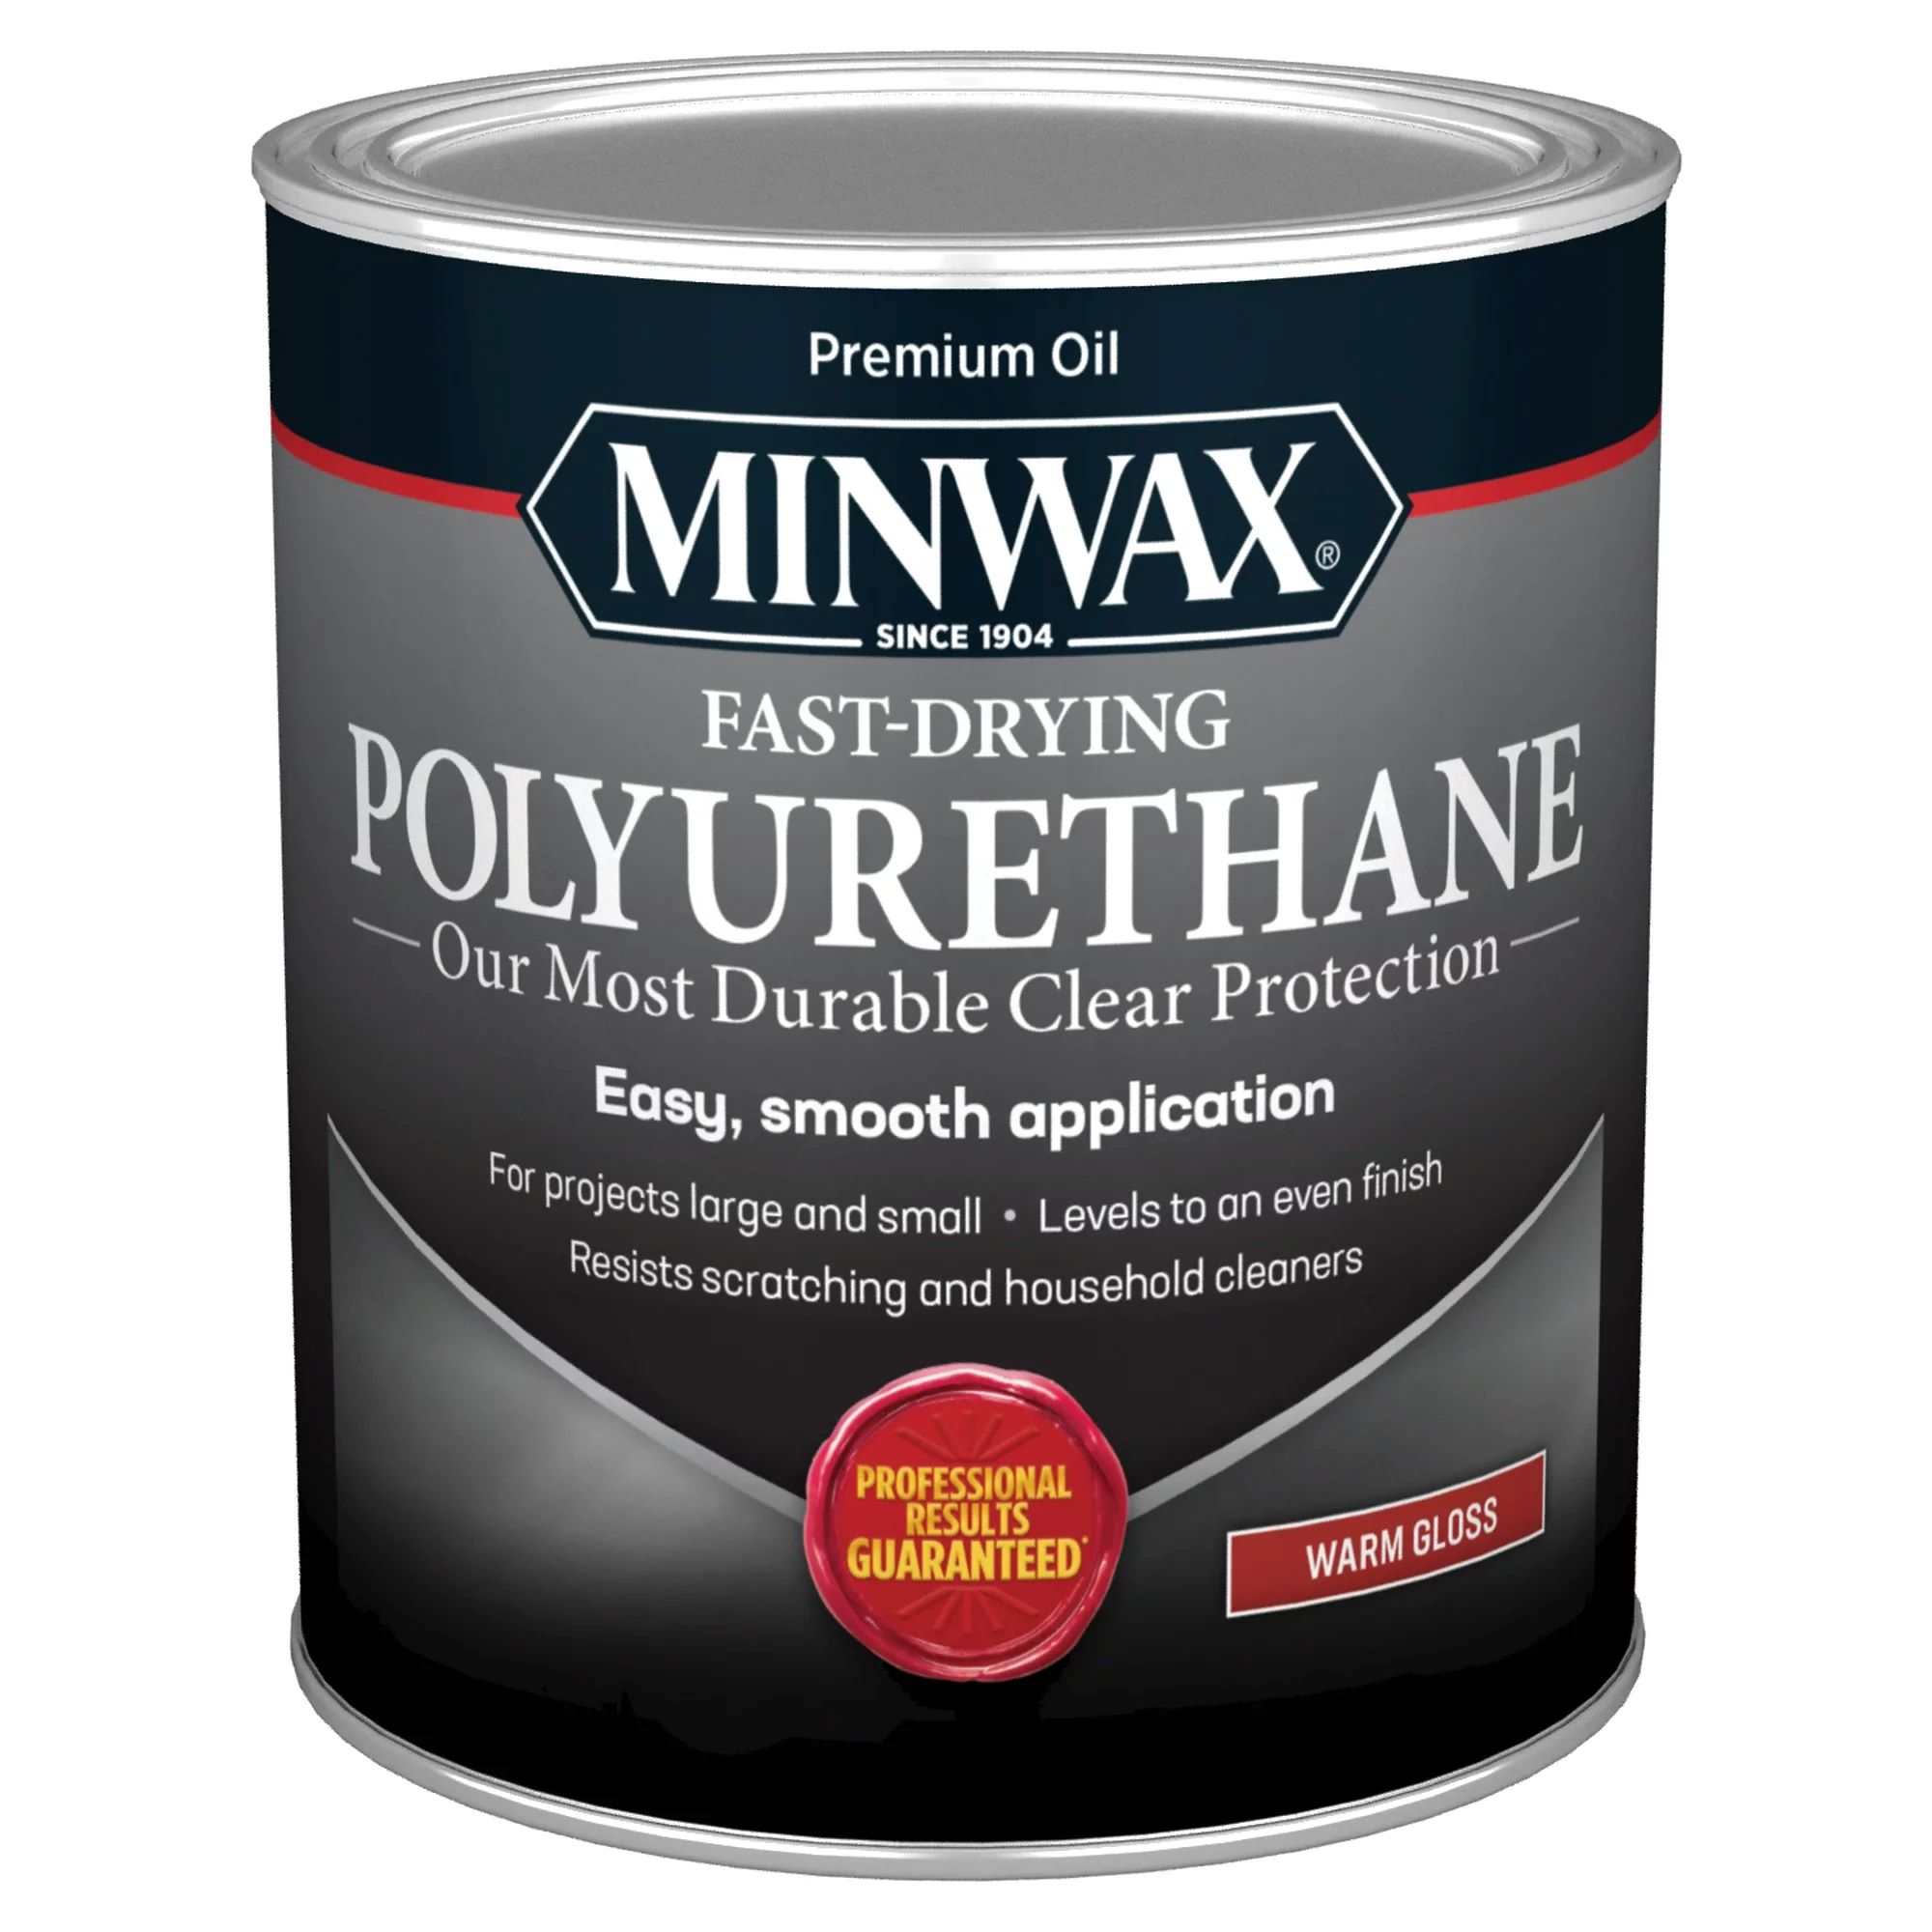 How To Store Polyurethane